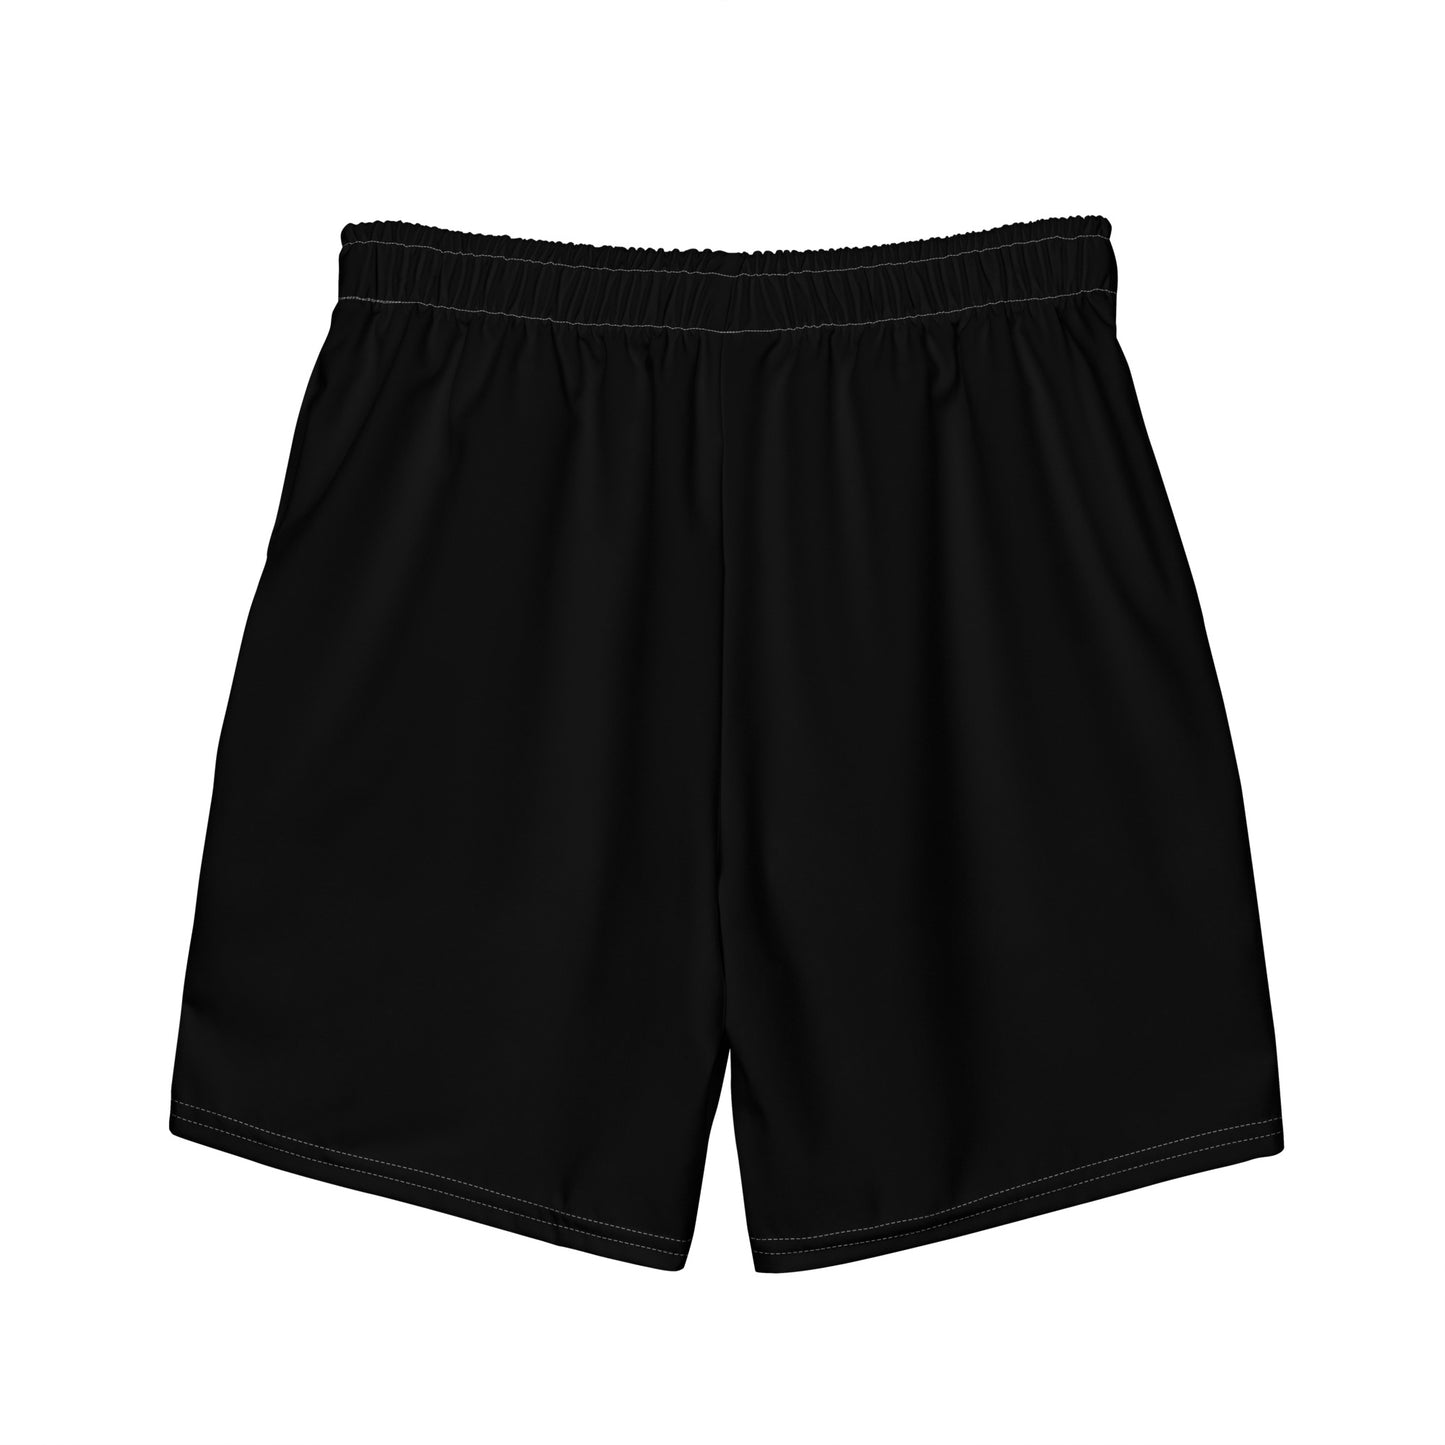 Genuine Swim Shorts Black